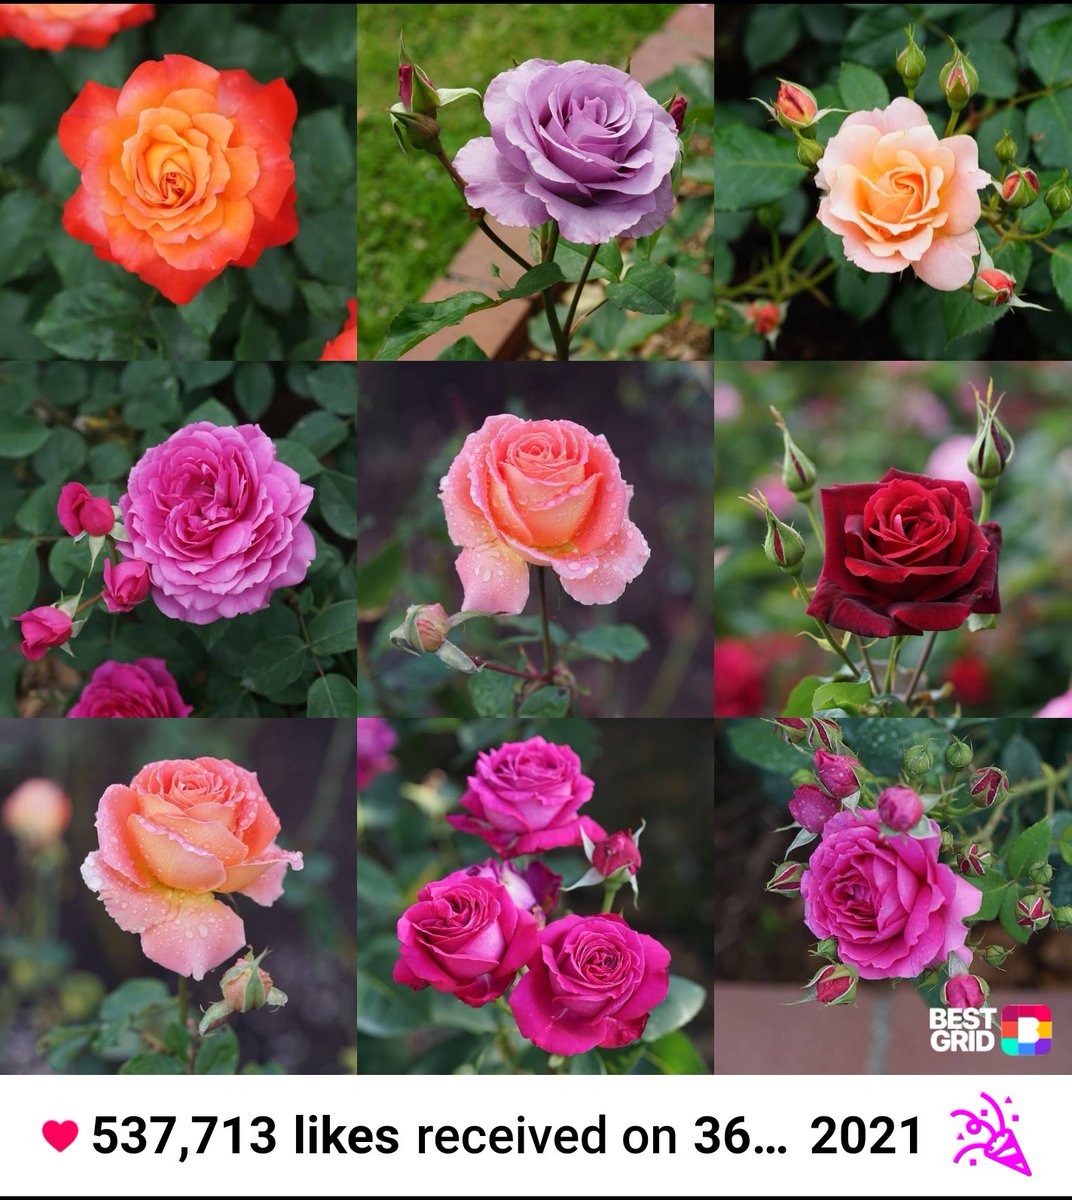 【Best9 Roses2021】
#ponyfony_flowers 
#fm_flowers_  #QuintaFlower 　#meiko_softflowers #phx_rosegarden　#meiko_roses
#healing_roses_ 　#meiko_softflowers
#mysterious_dream_roses